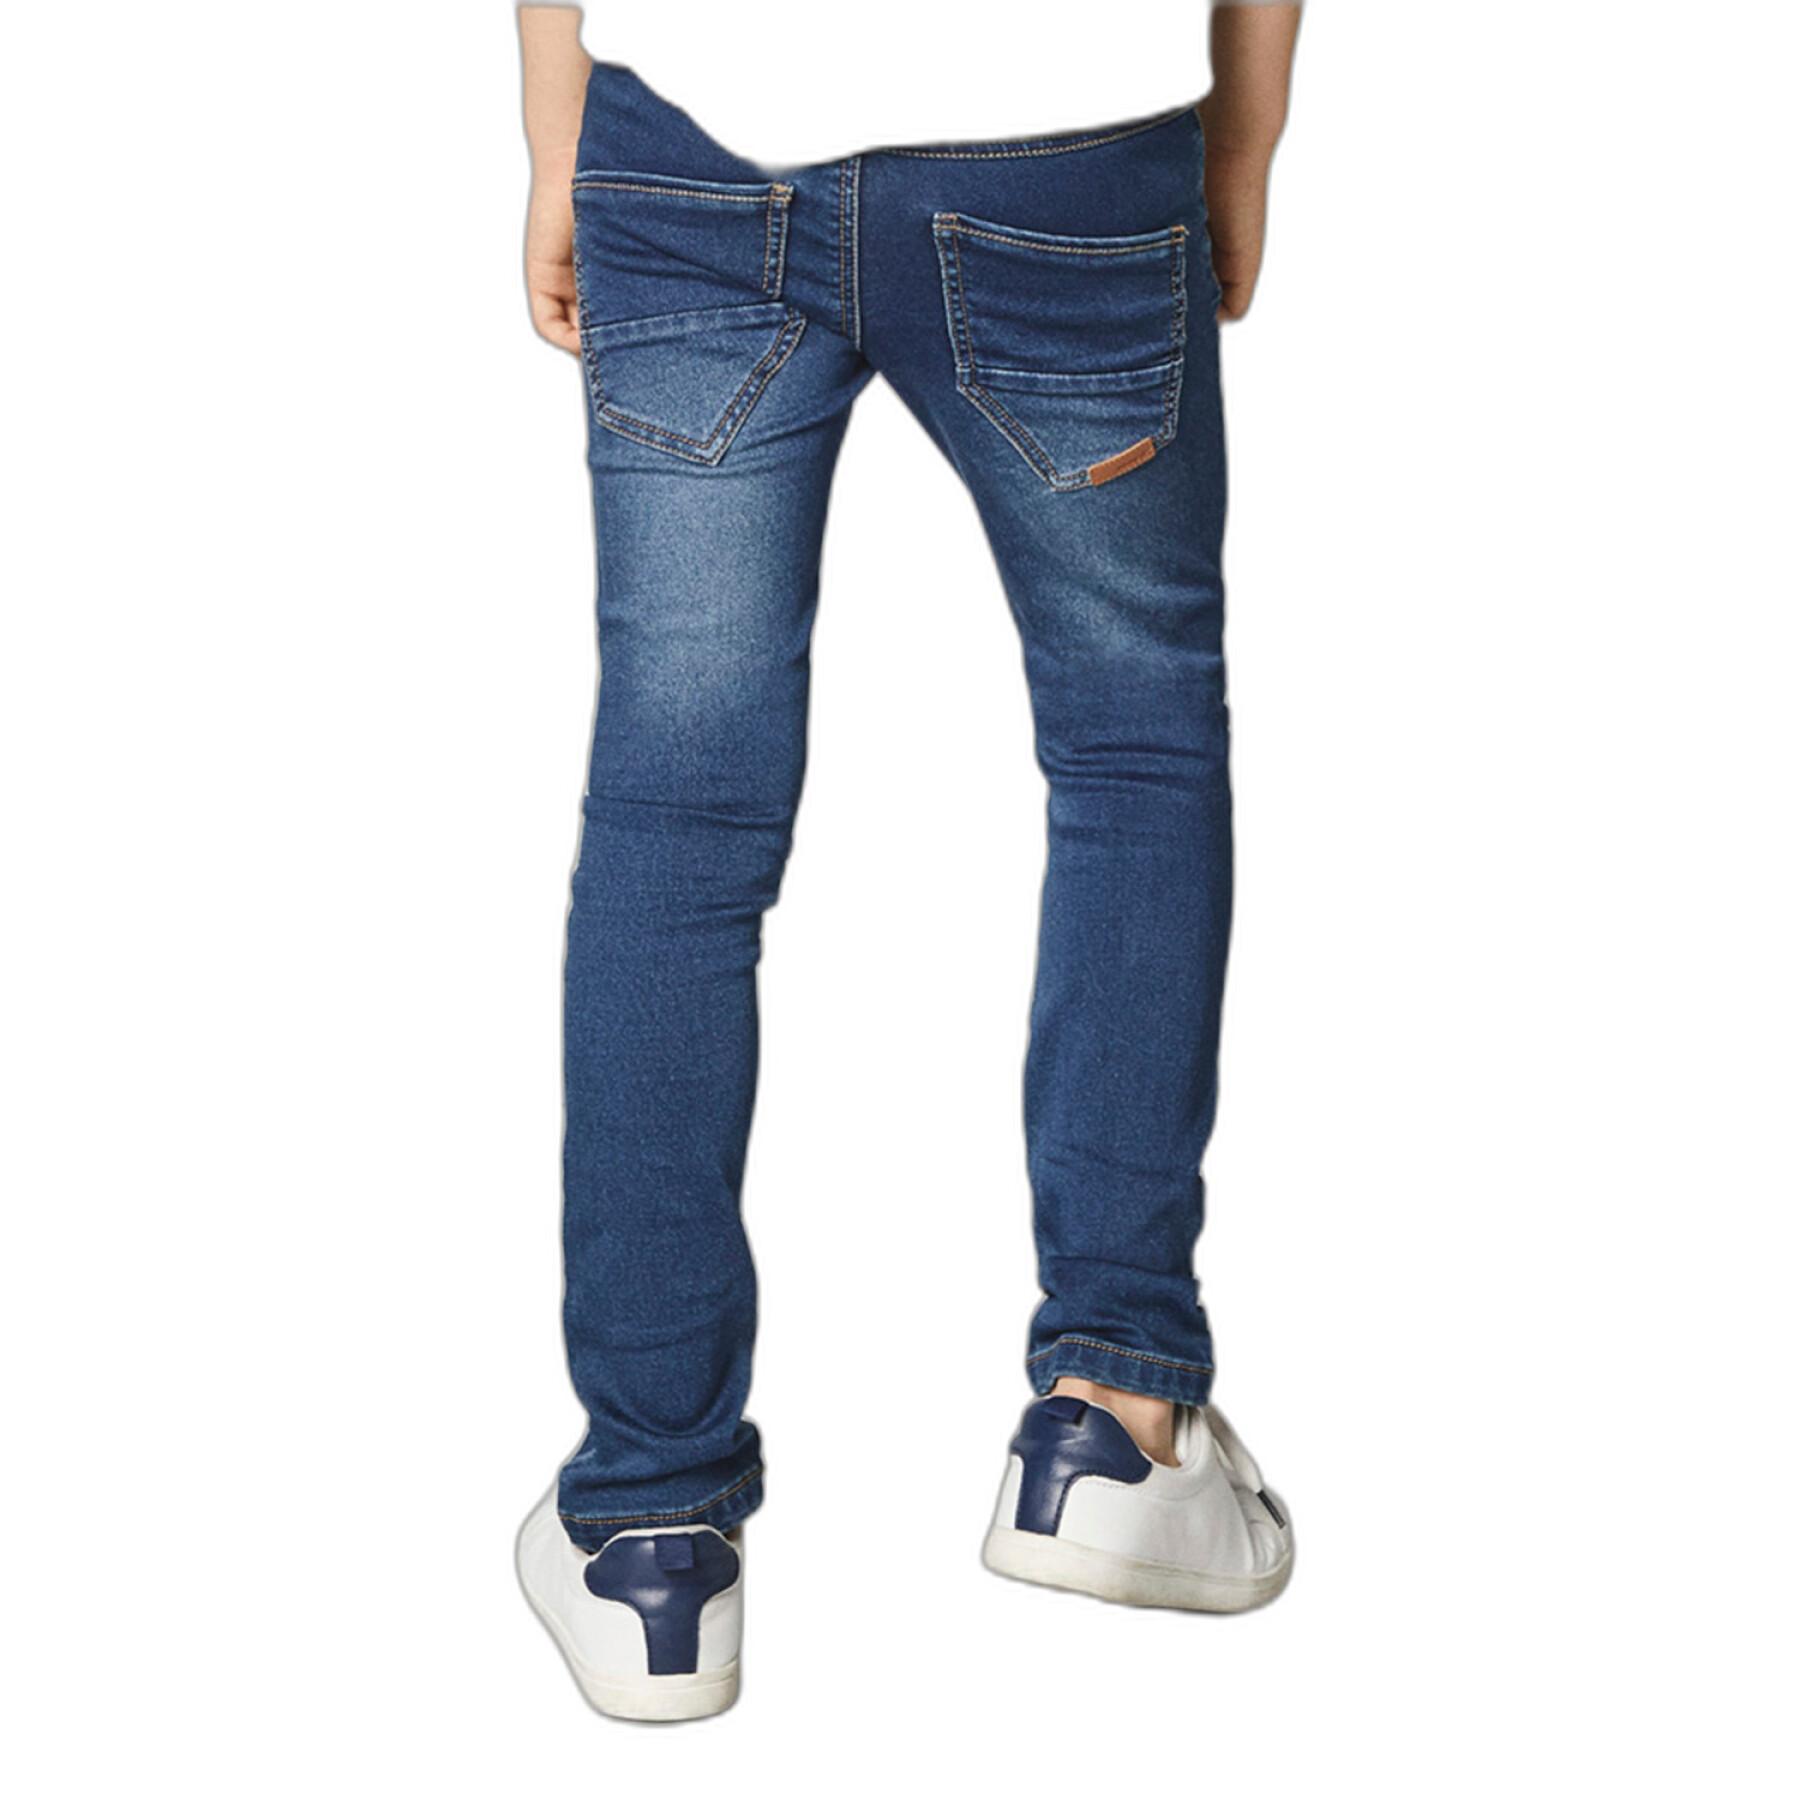 Children's slim jeans Name it Nkmtheo 3113-Th